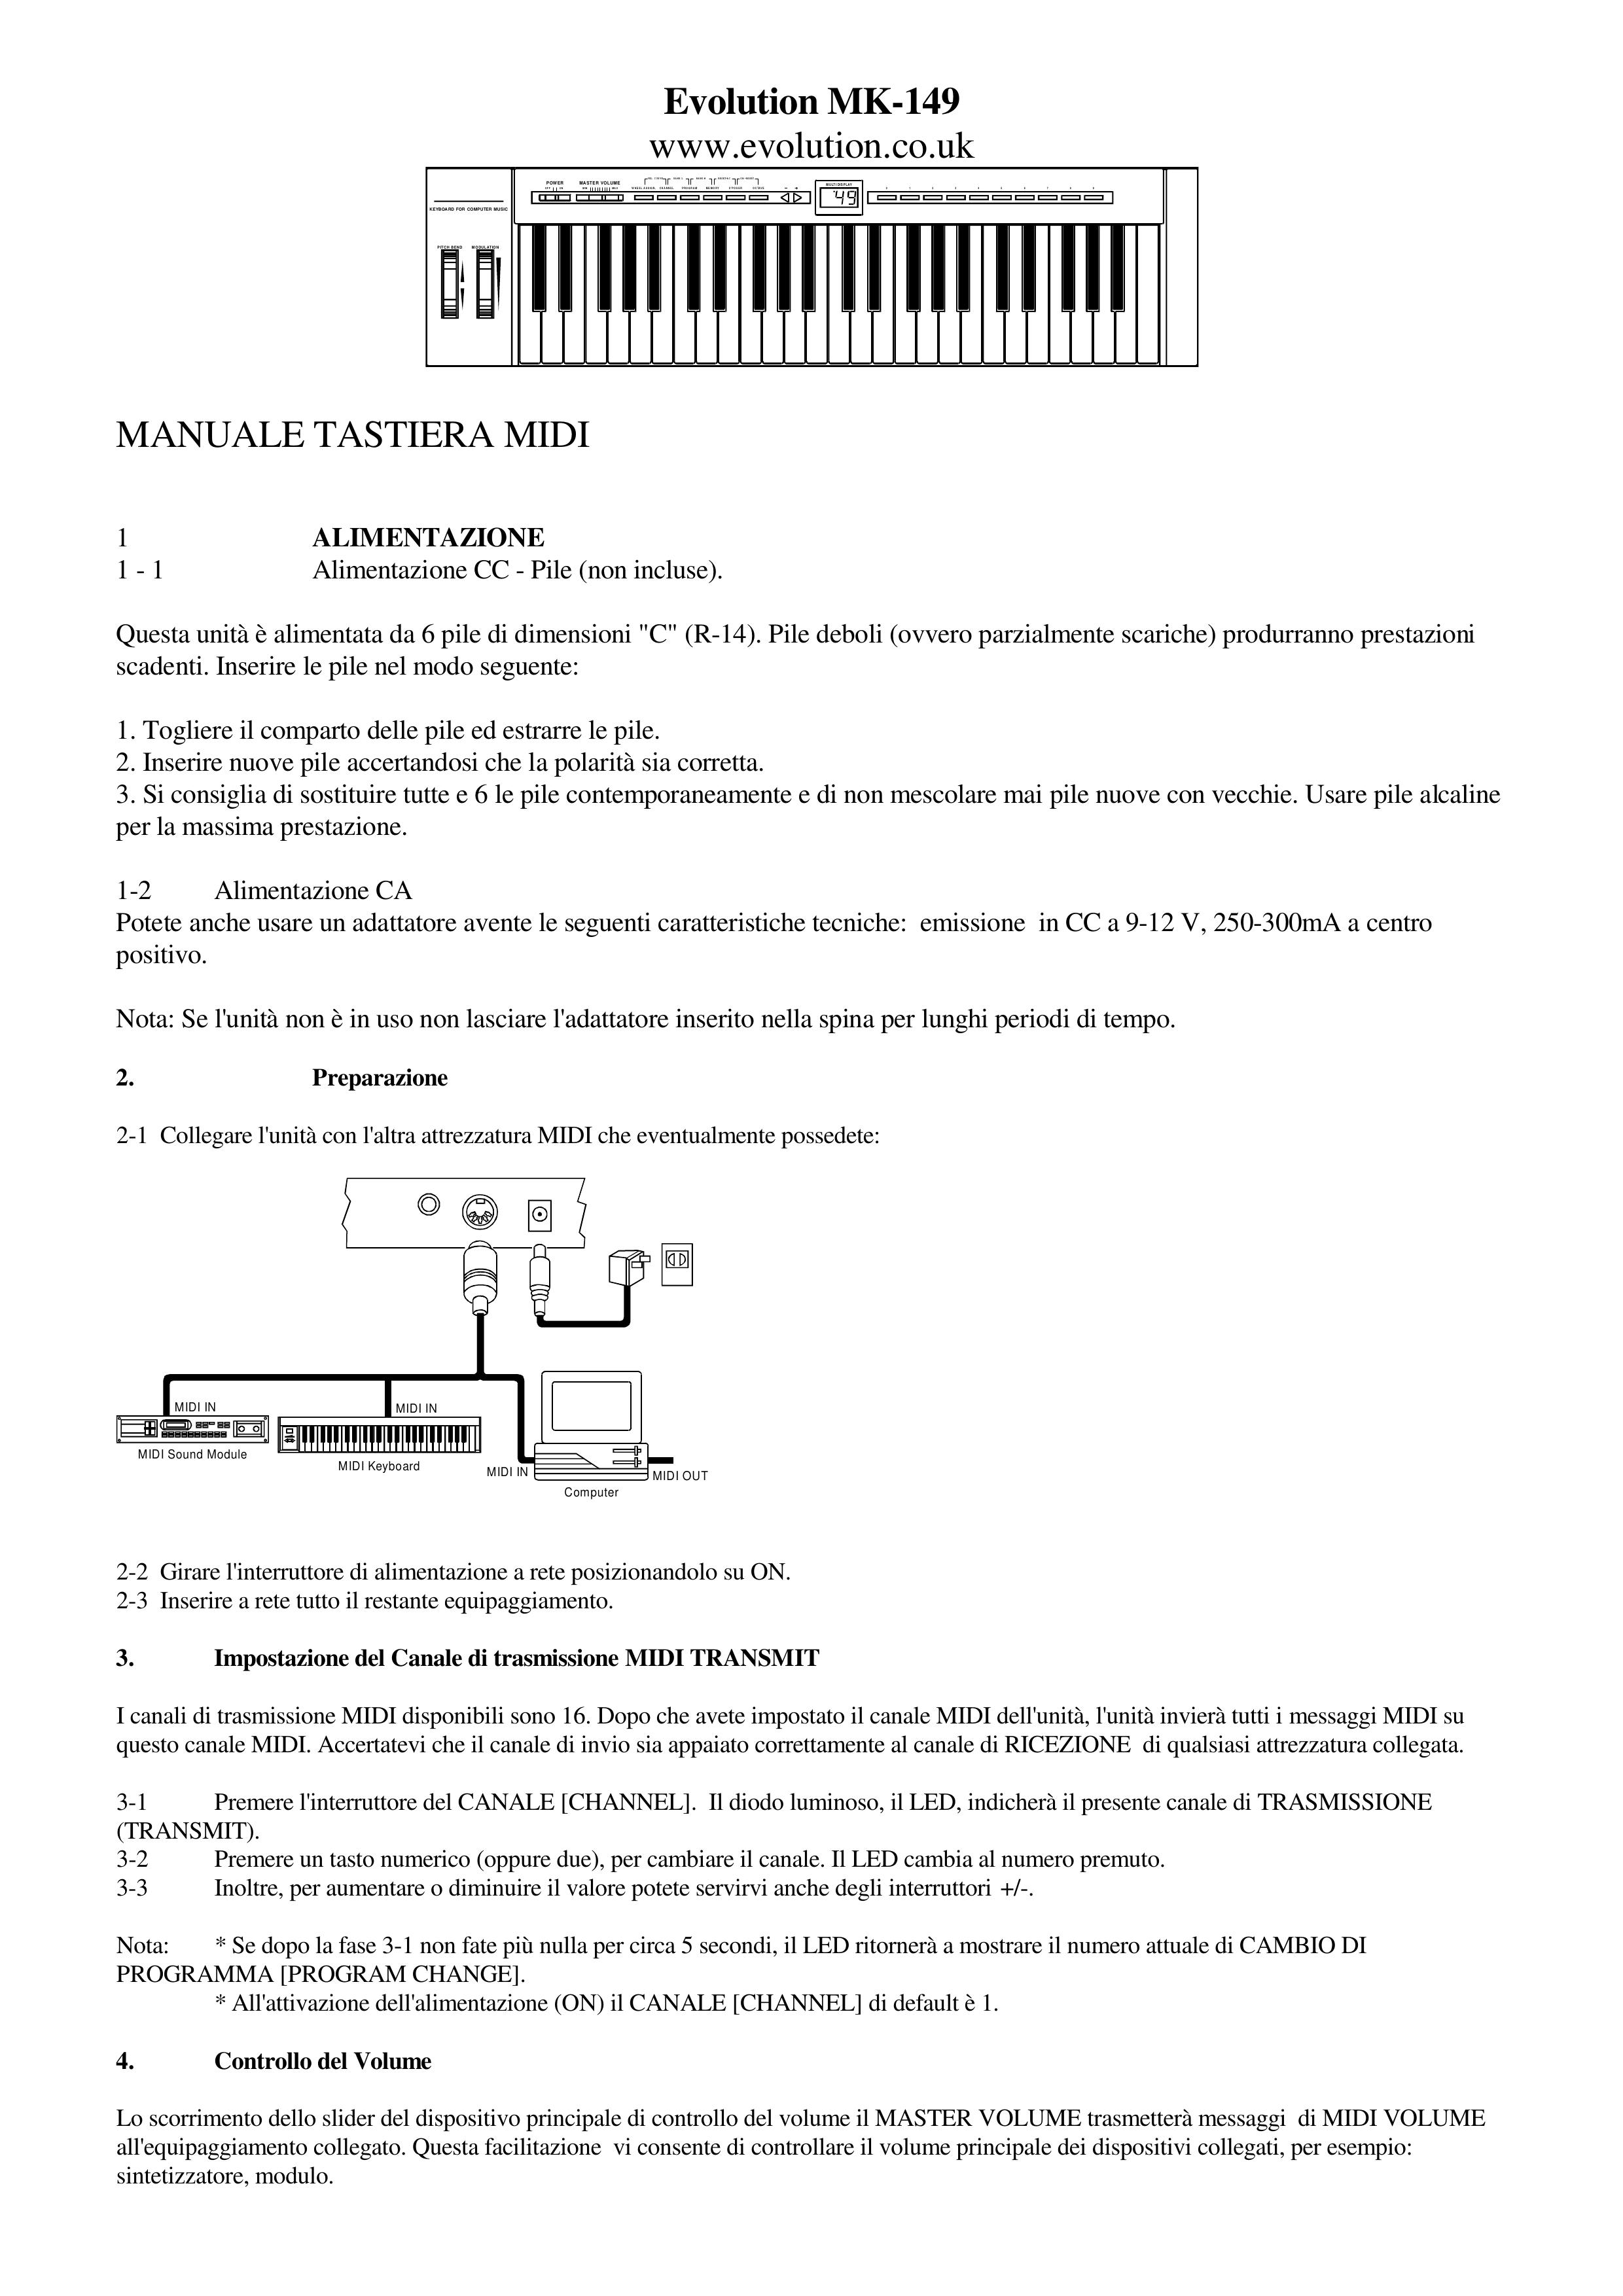 Evolution Technologies MK-149 Electronic Keyboard User Manual